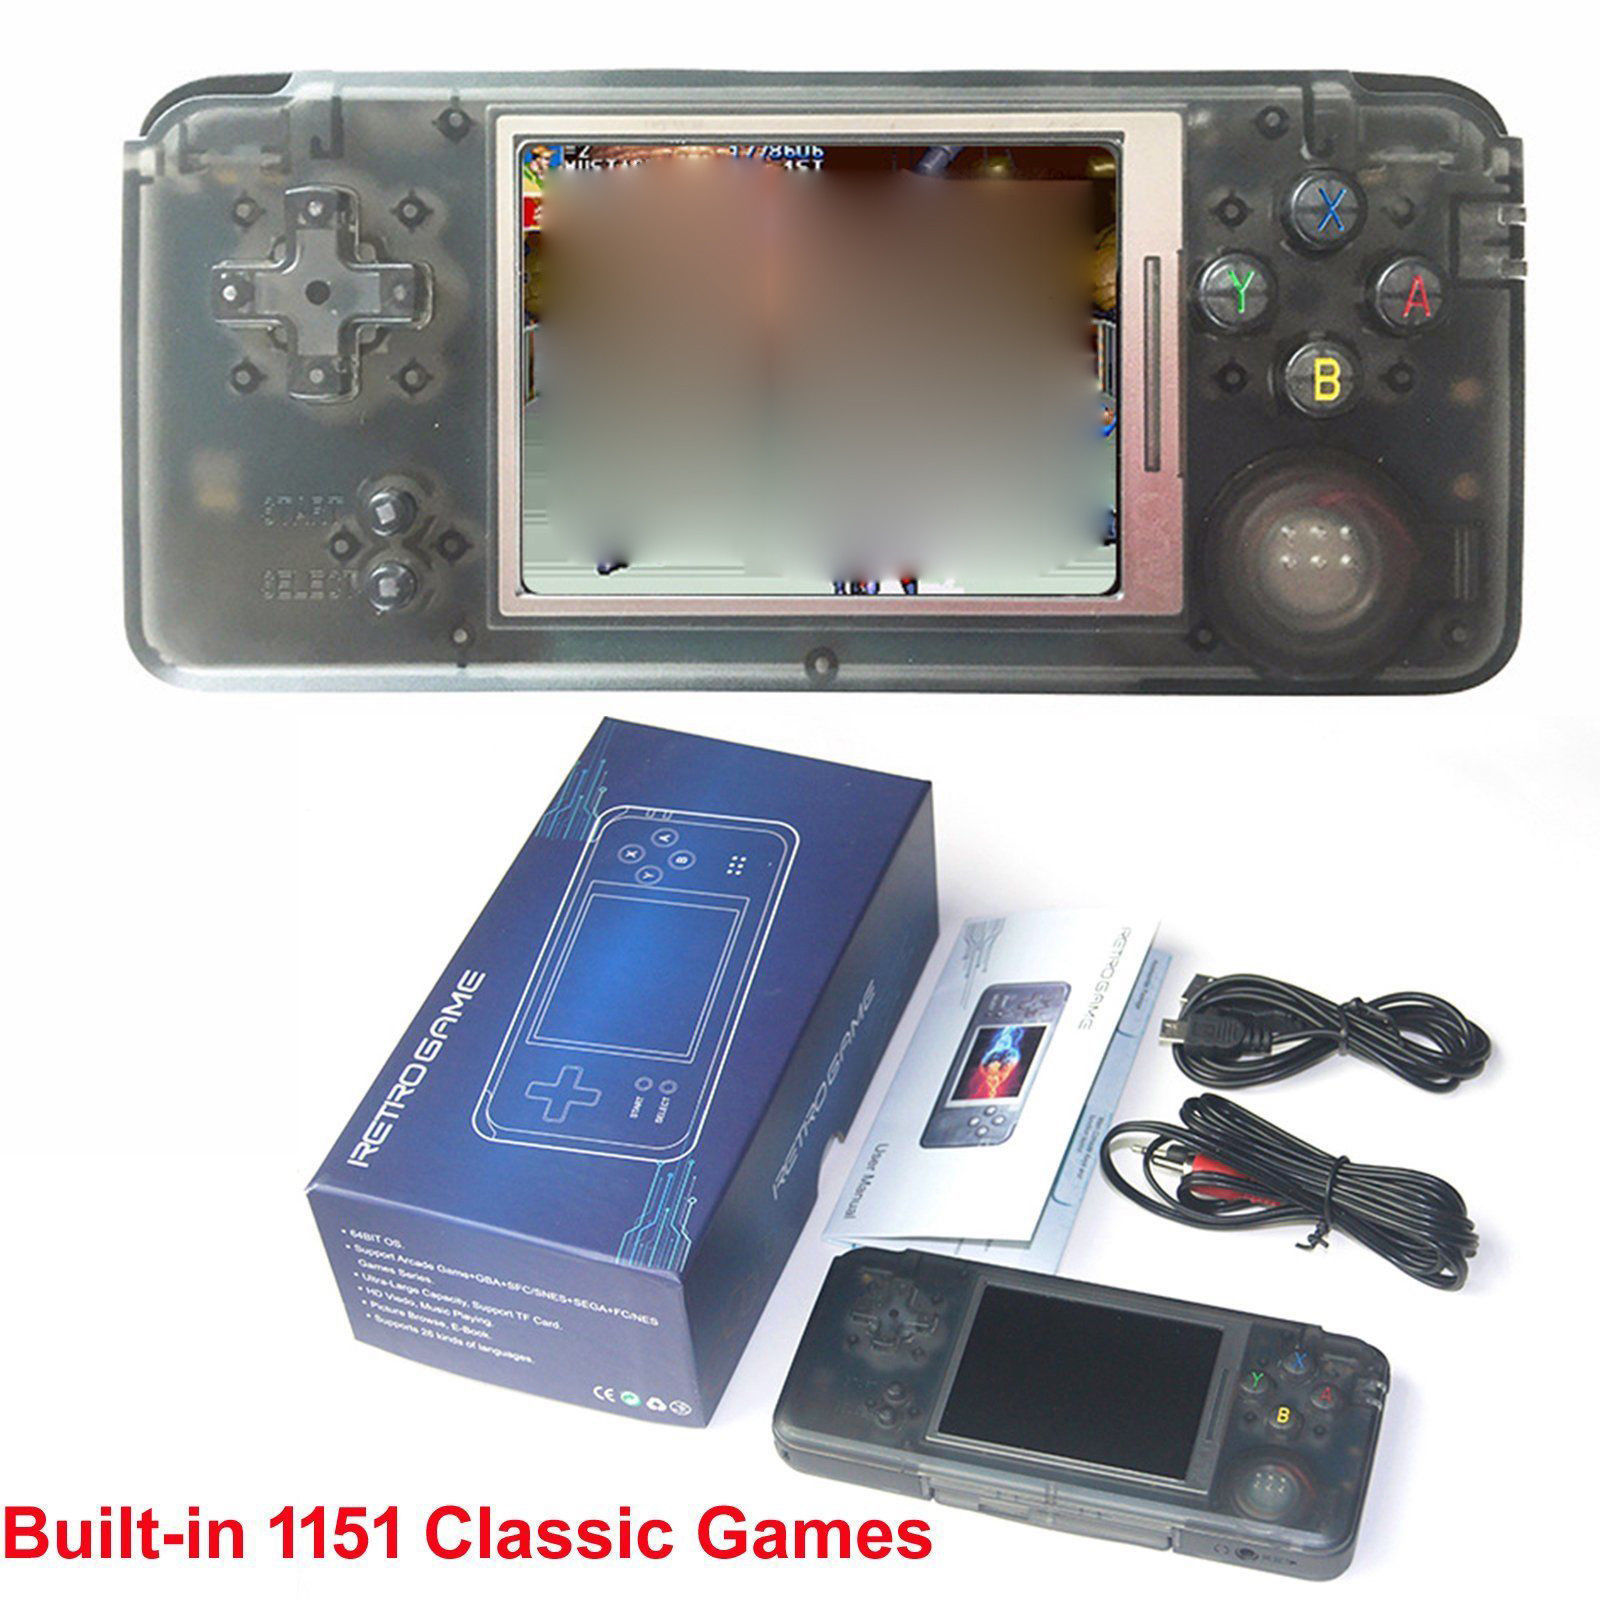 64bit Handheld Retro Video Game Console Portable w/ 1151 Classic Games